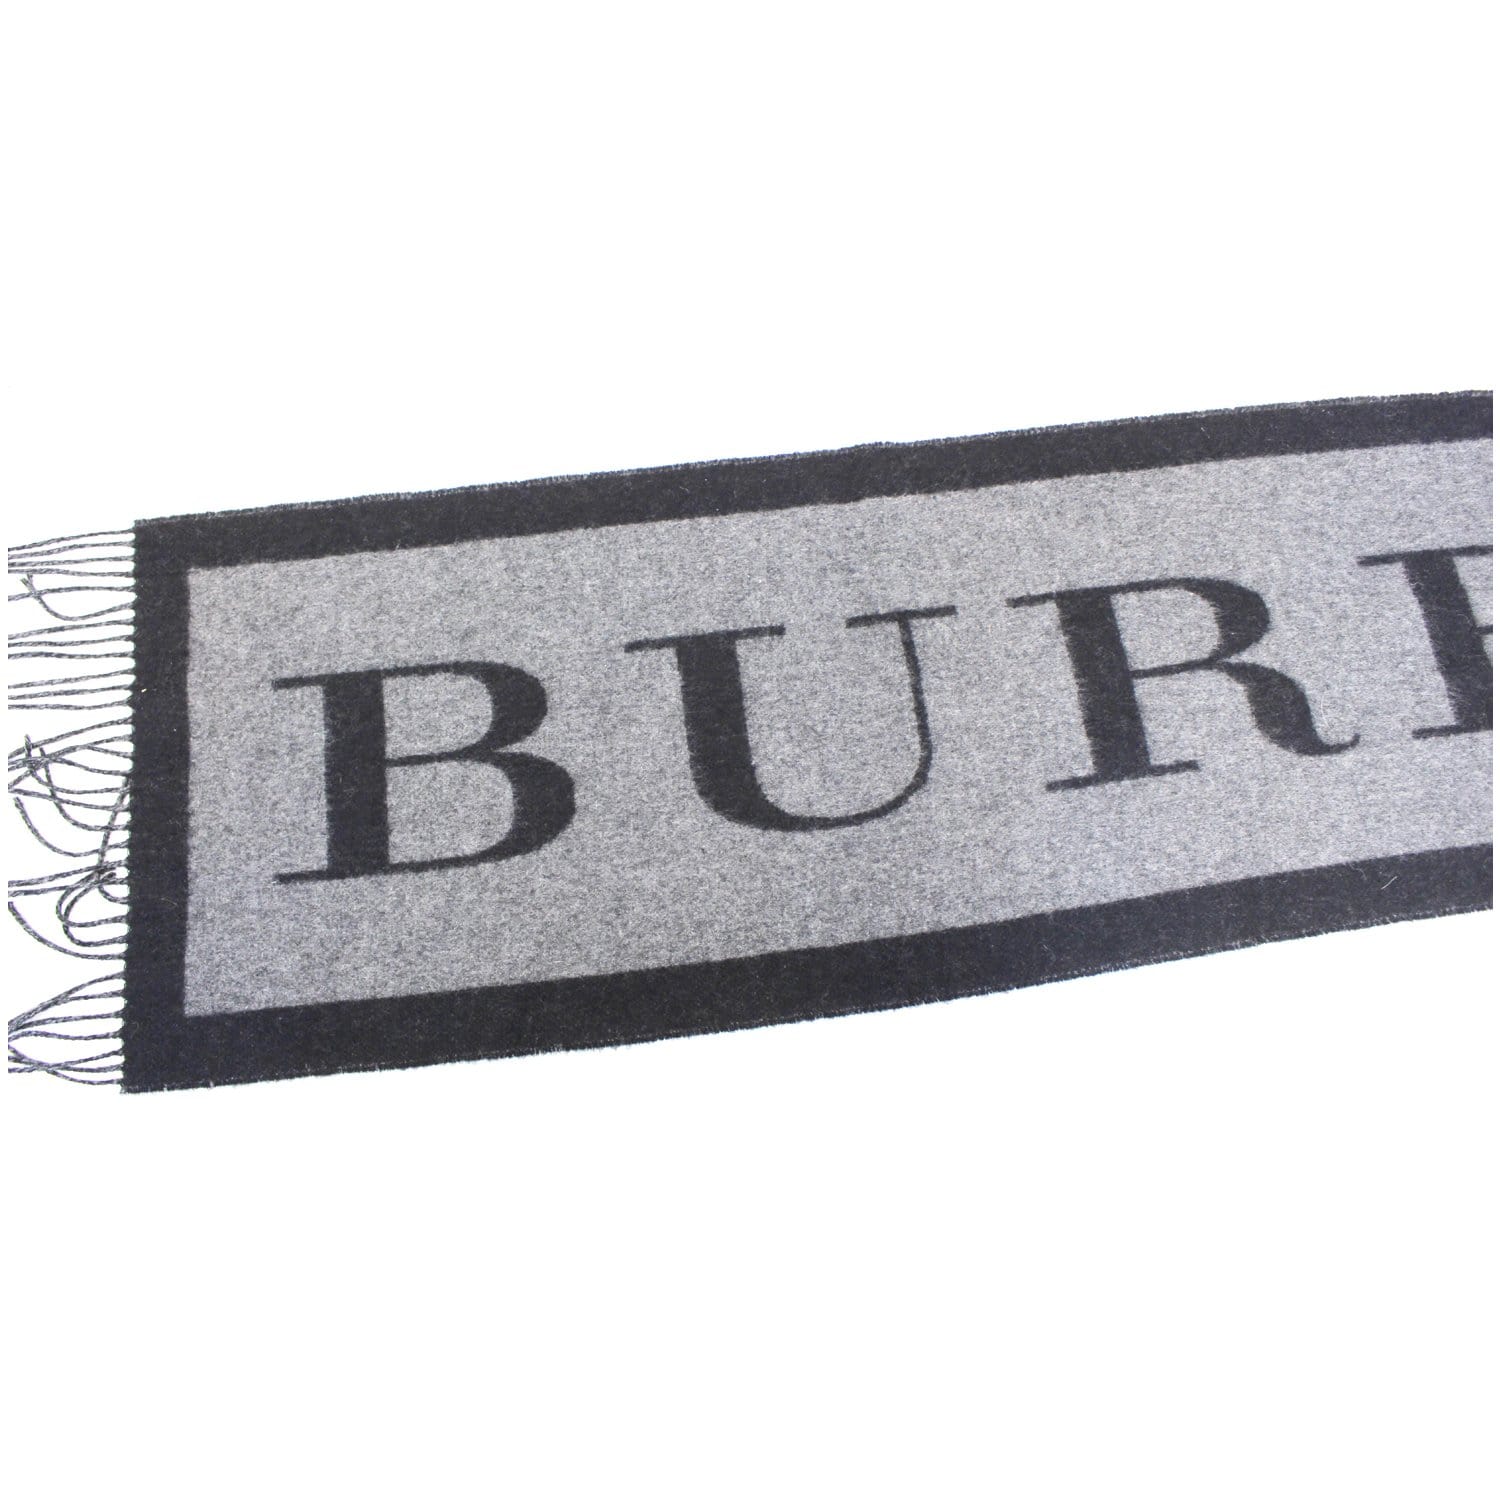 Burberry Scarf Logo Text Cashmere Black & Grey